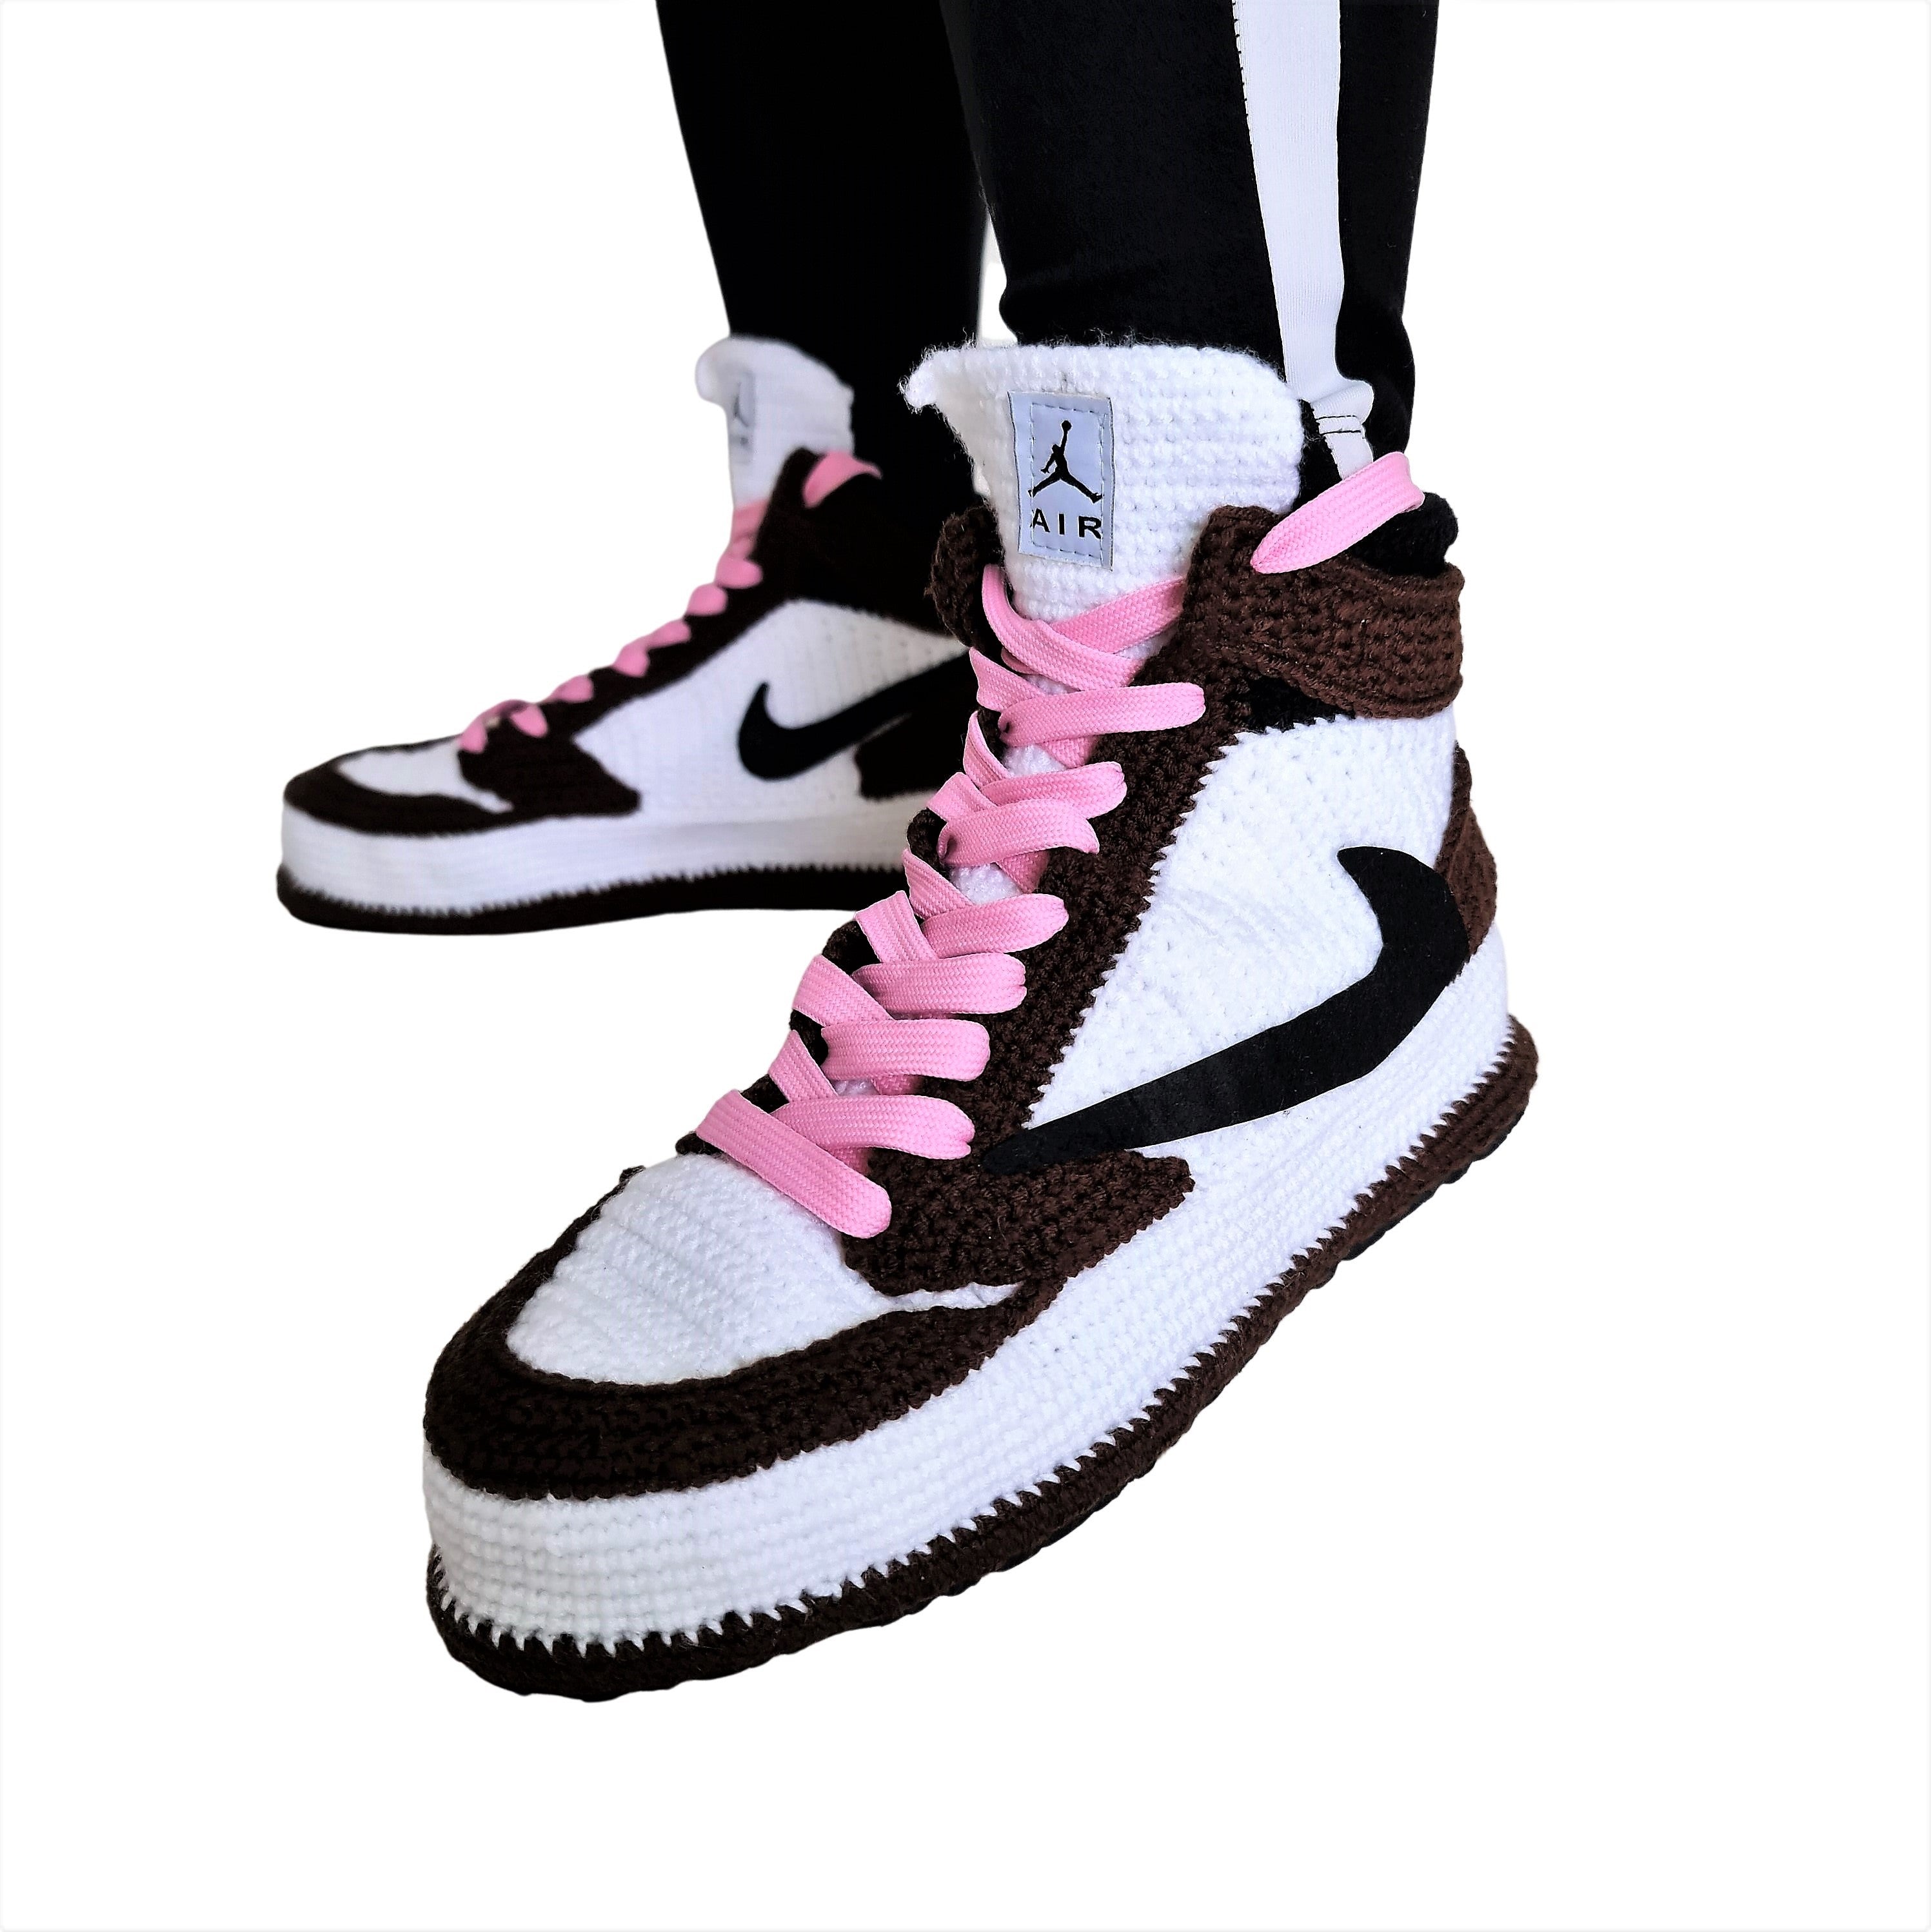 Travis Jordan Sneakers Custom Slippers Scott Pink Lace Handmade